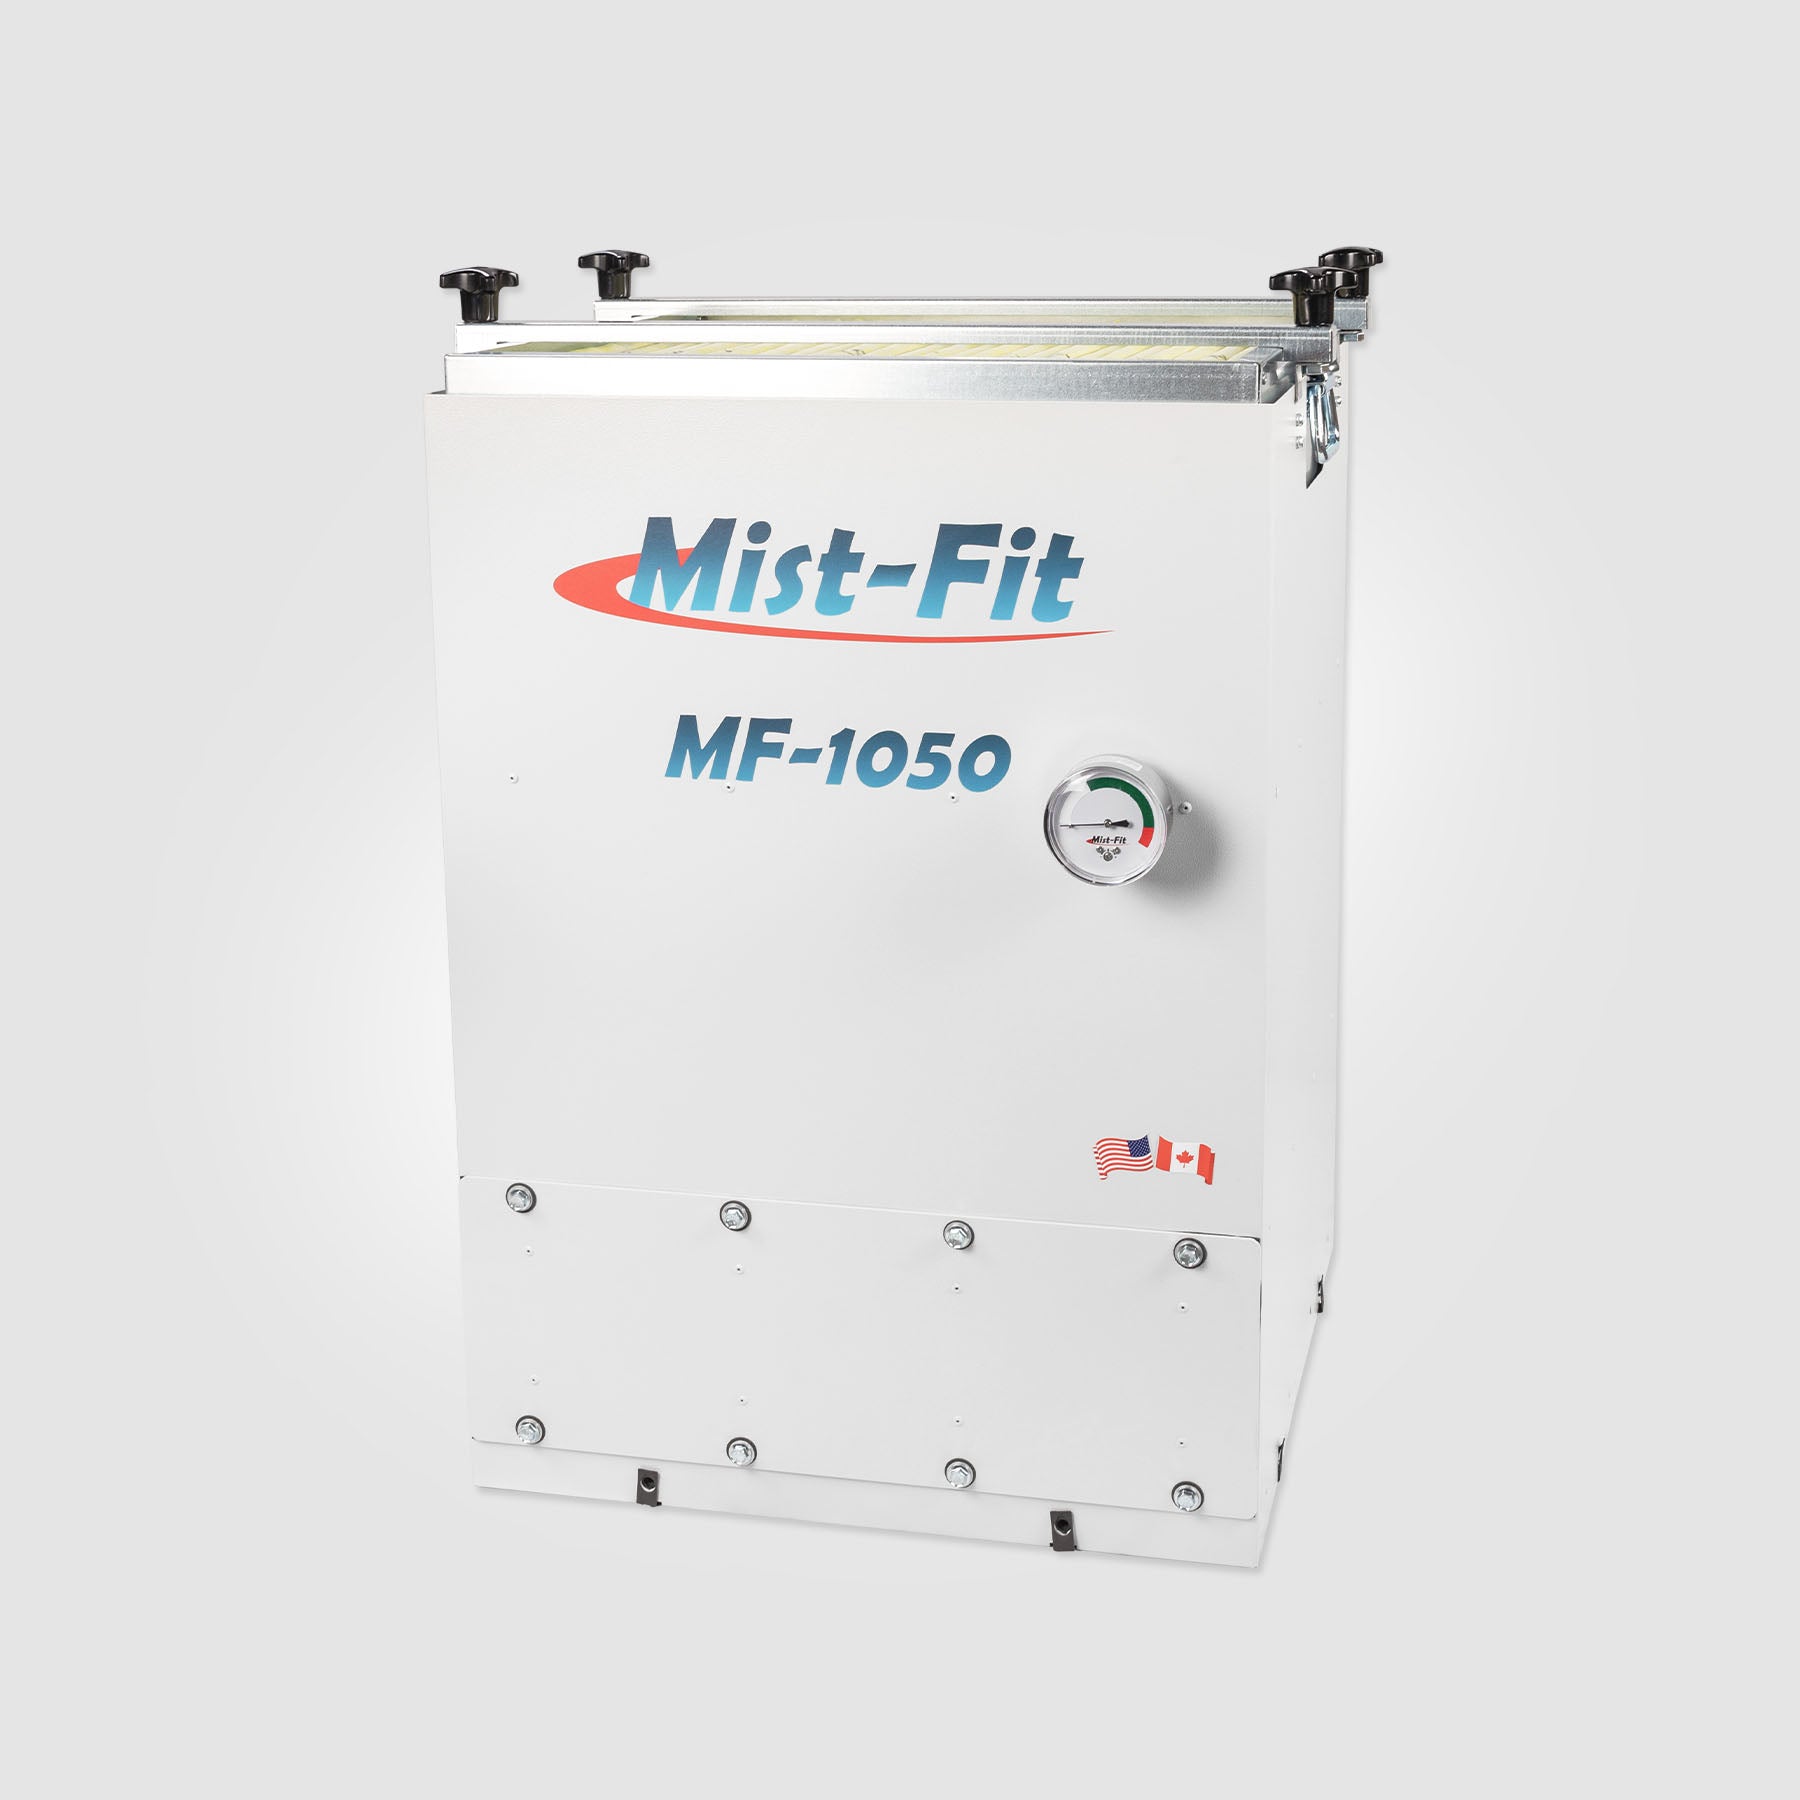 Mist-Fit MF-1050 Mist Collector